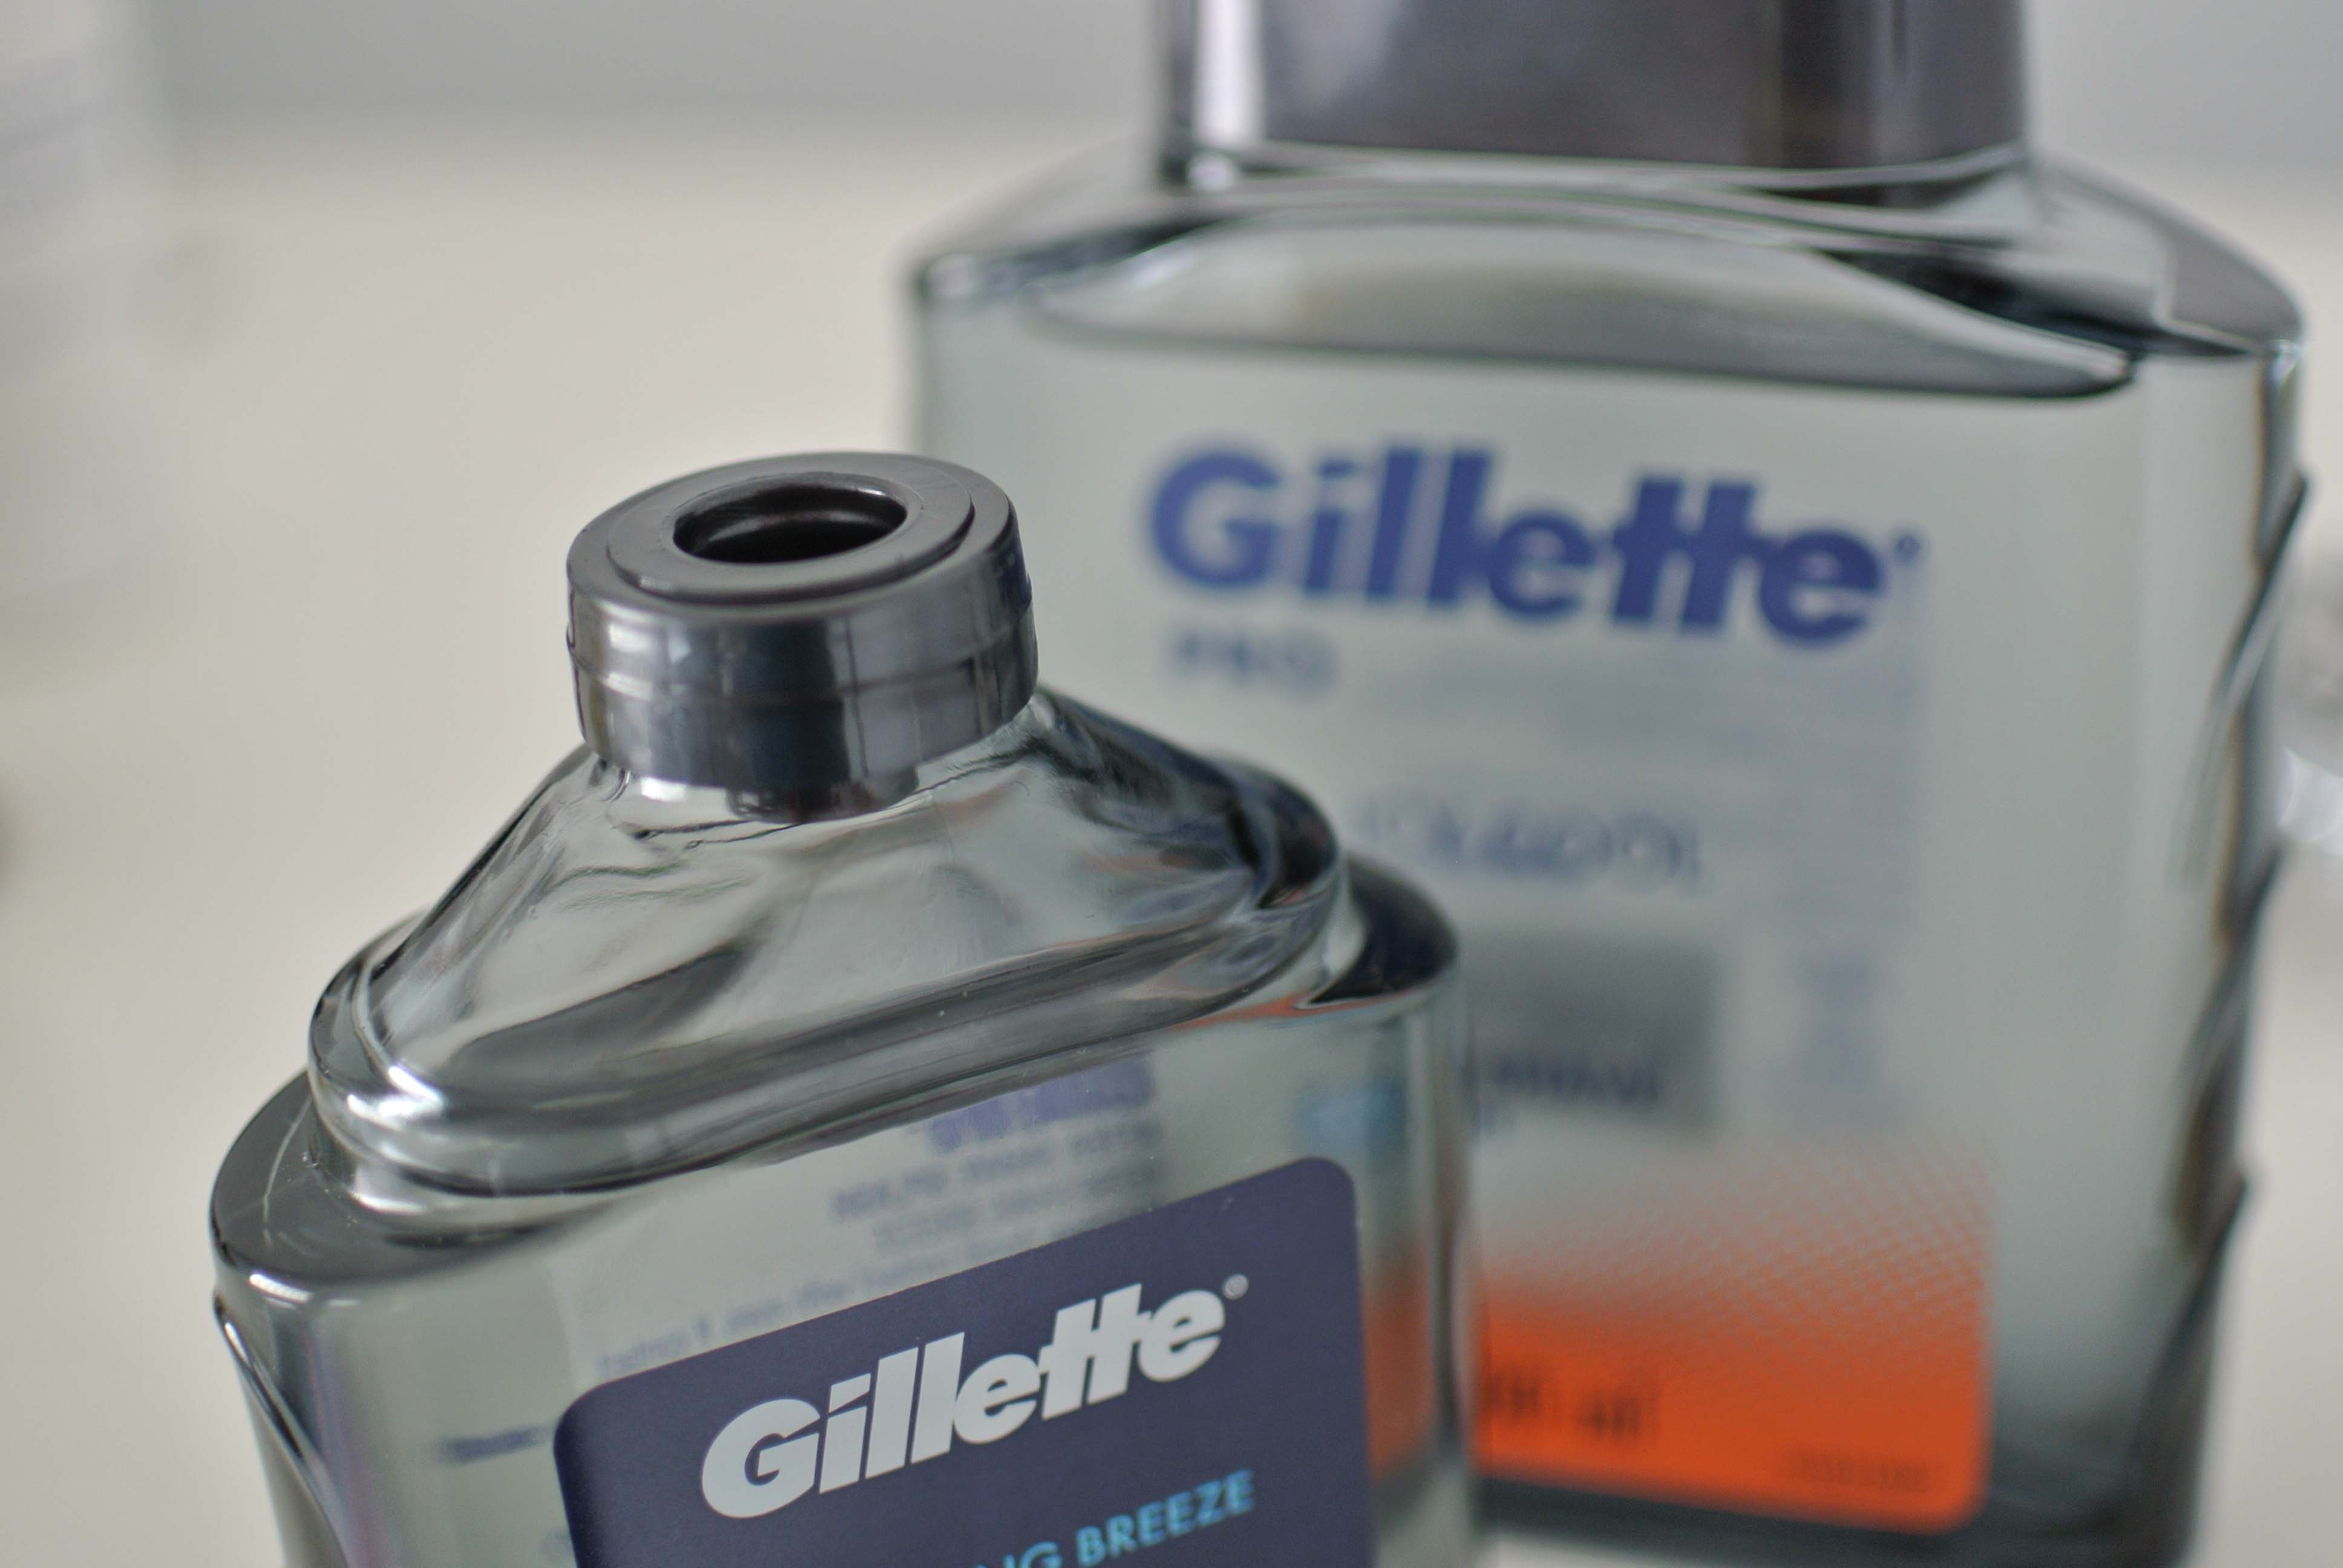 
Gillette bottle opening
